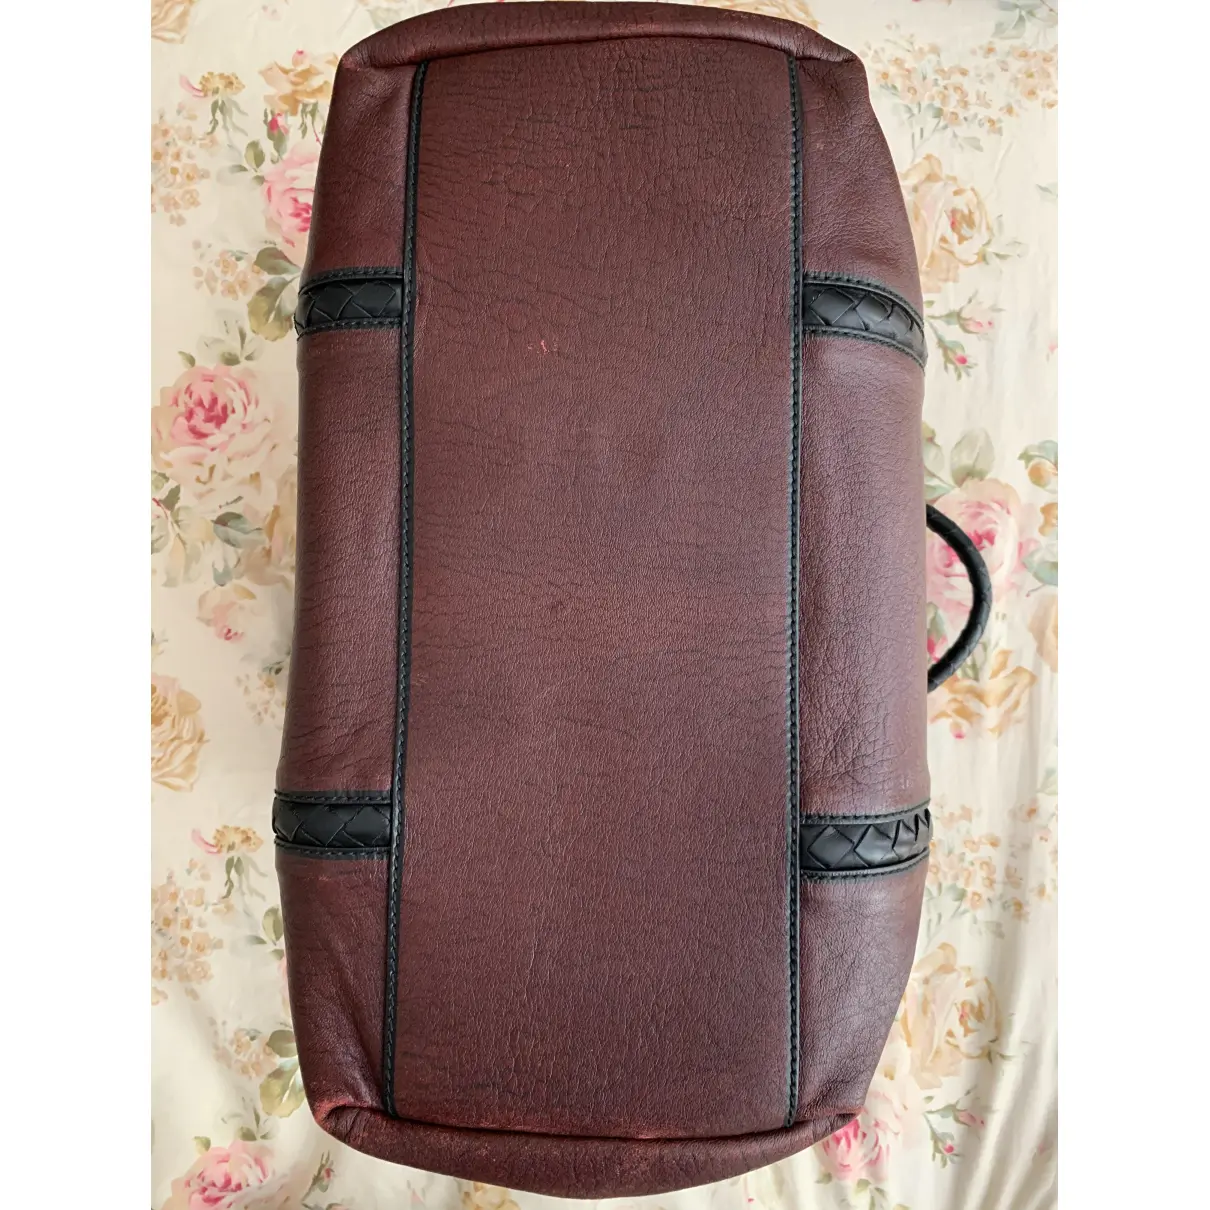 Roma leather handbag Bottega Veneta